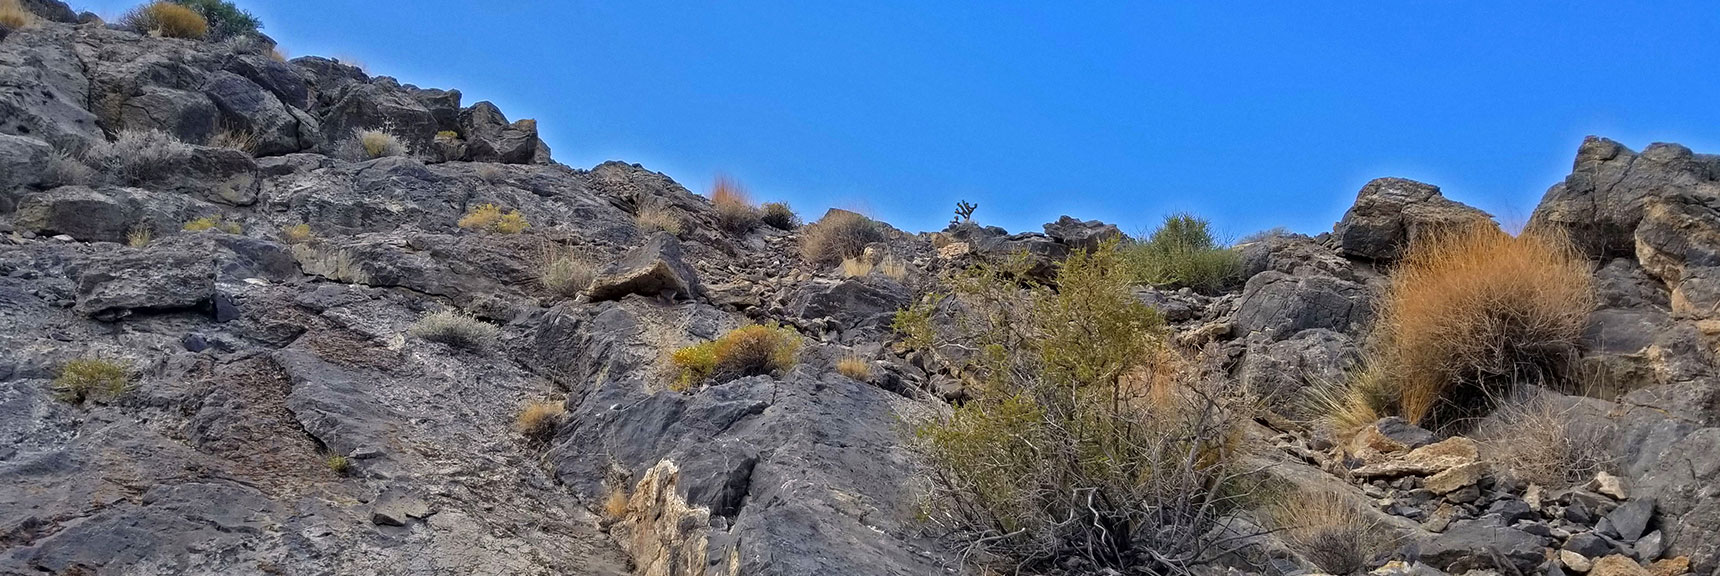 Ascending Fossil Ridge. Bands of Ancient Dark Rock, but No Fossils Here | Fossil Ridge End to End | Sheep Range | Desert National Wildlife Refuge, Nevada